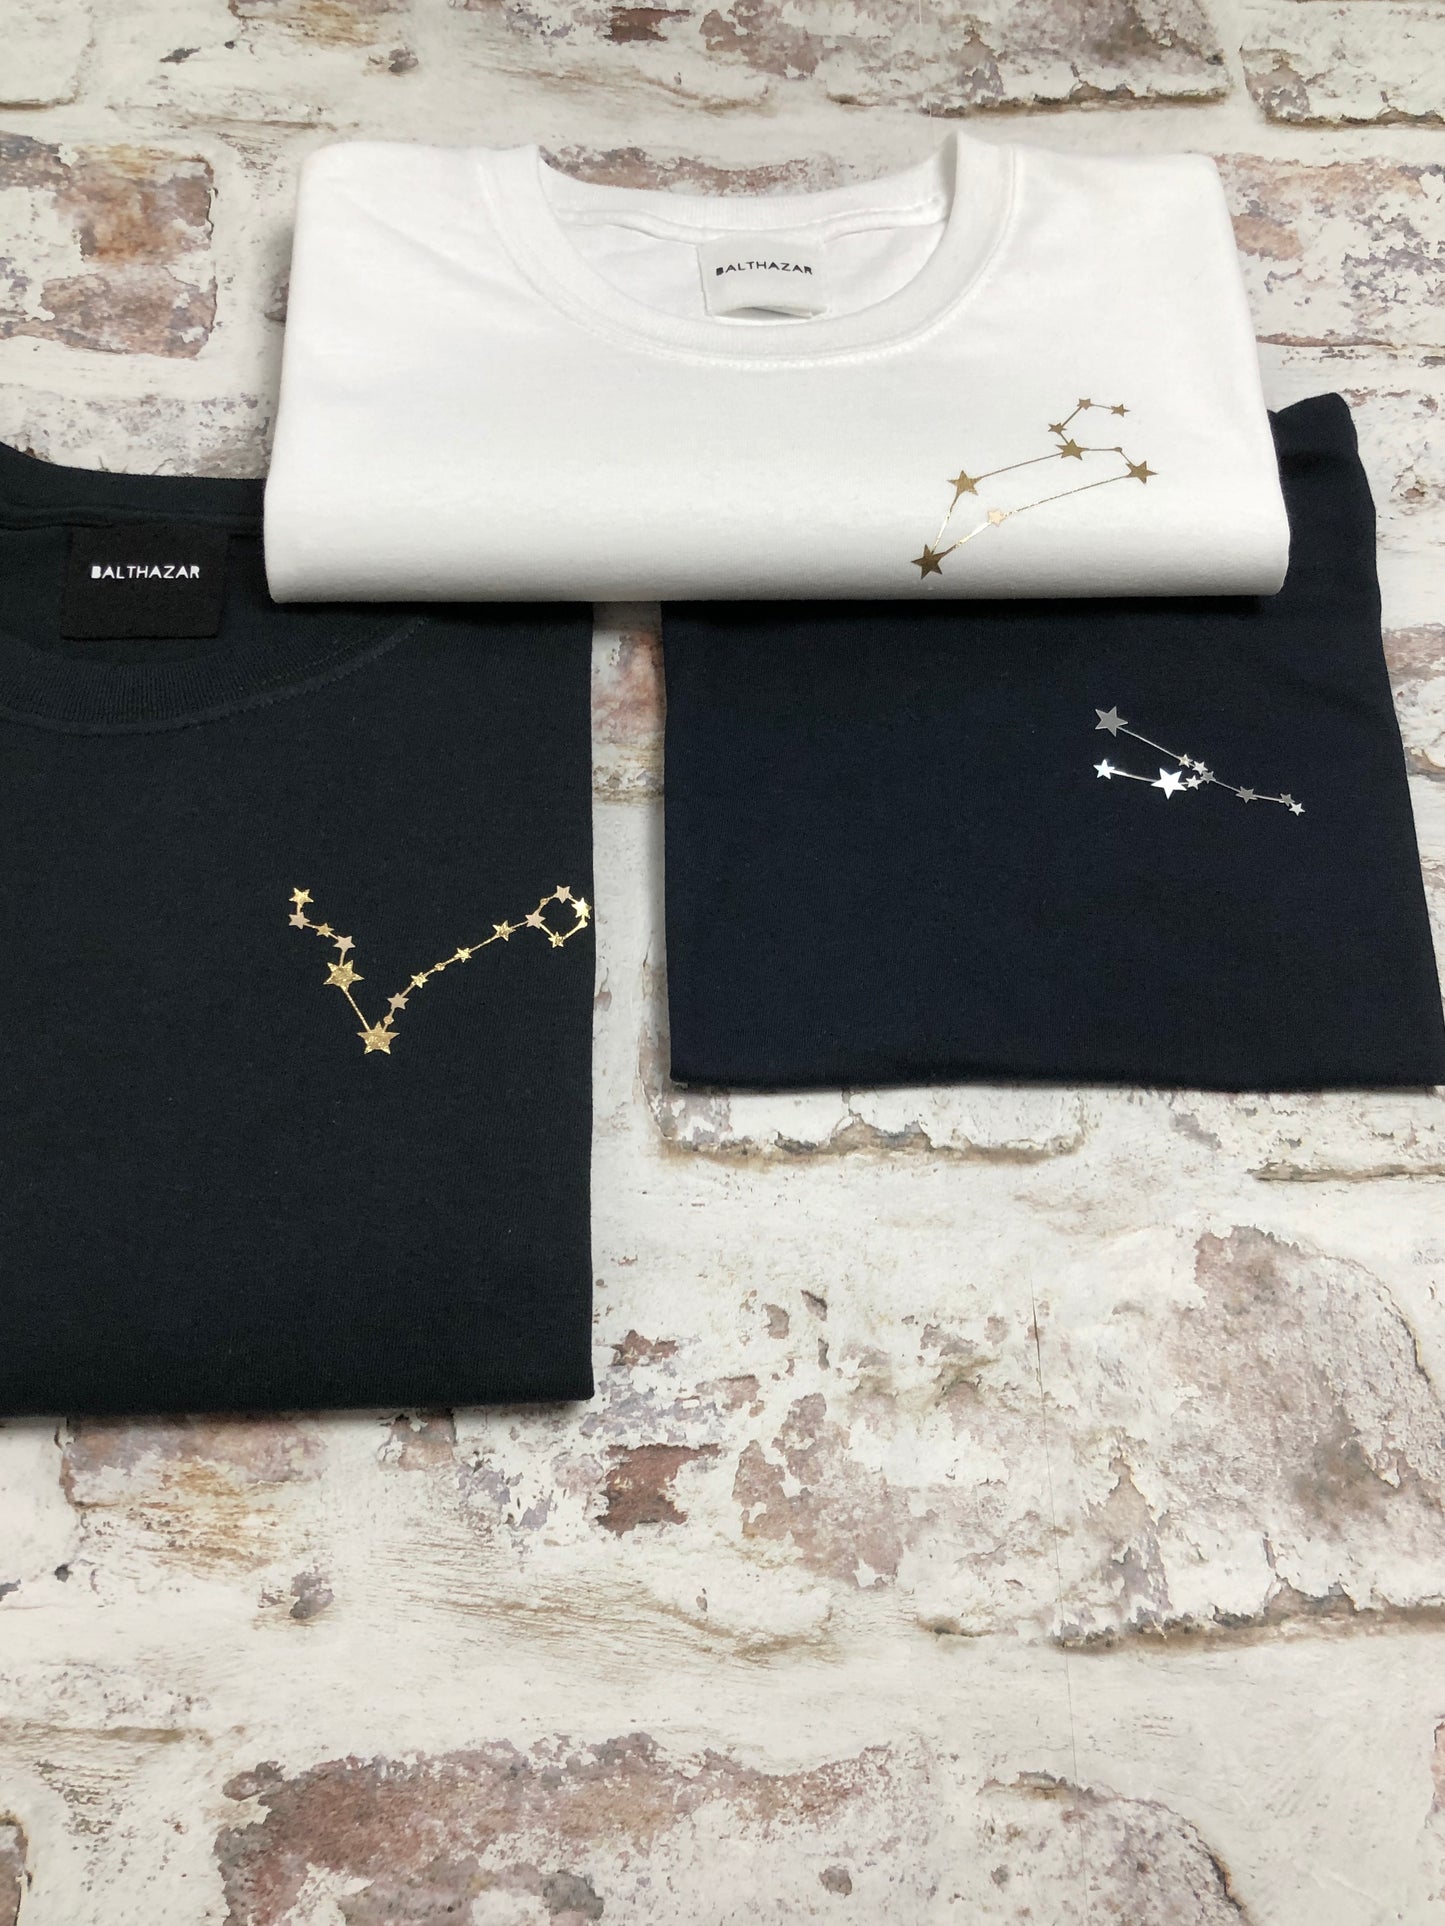 Constellation t-shirt - Personalised Zodiac